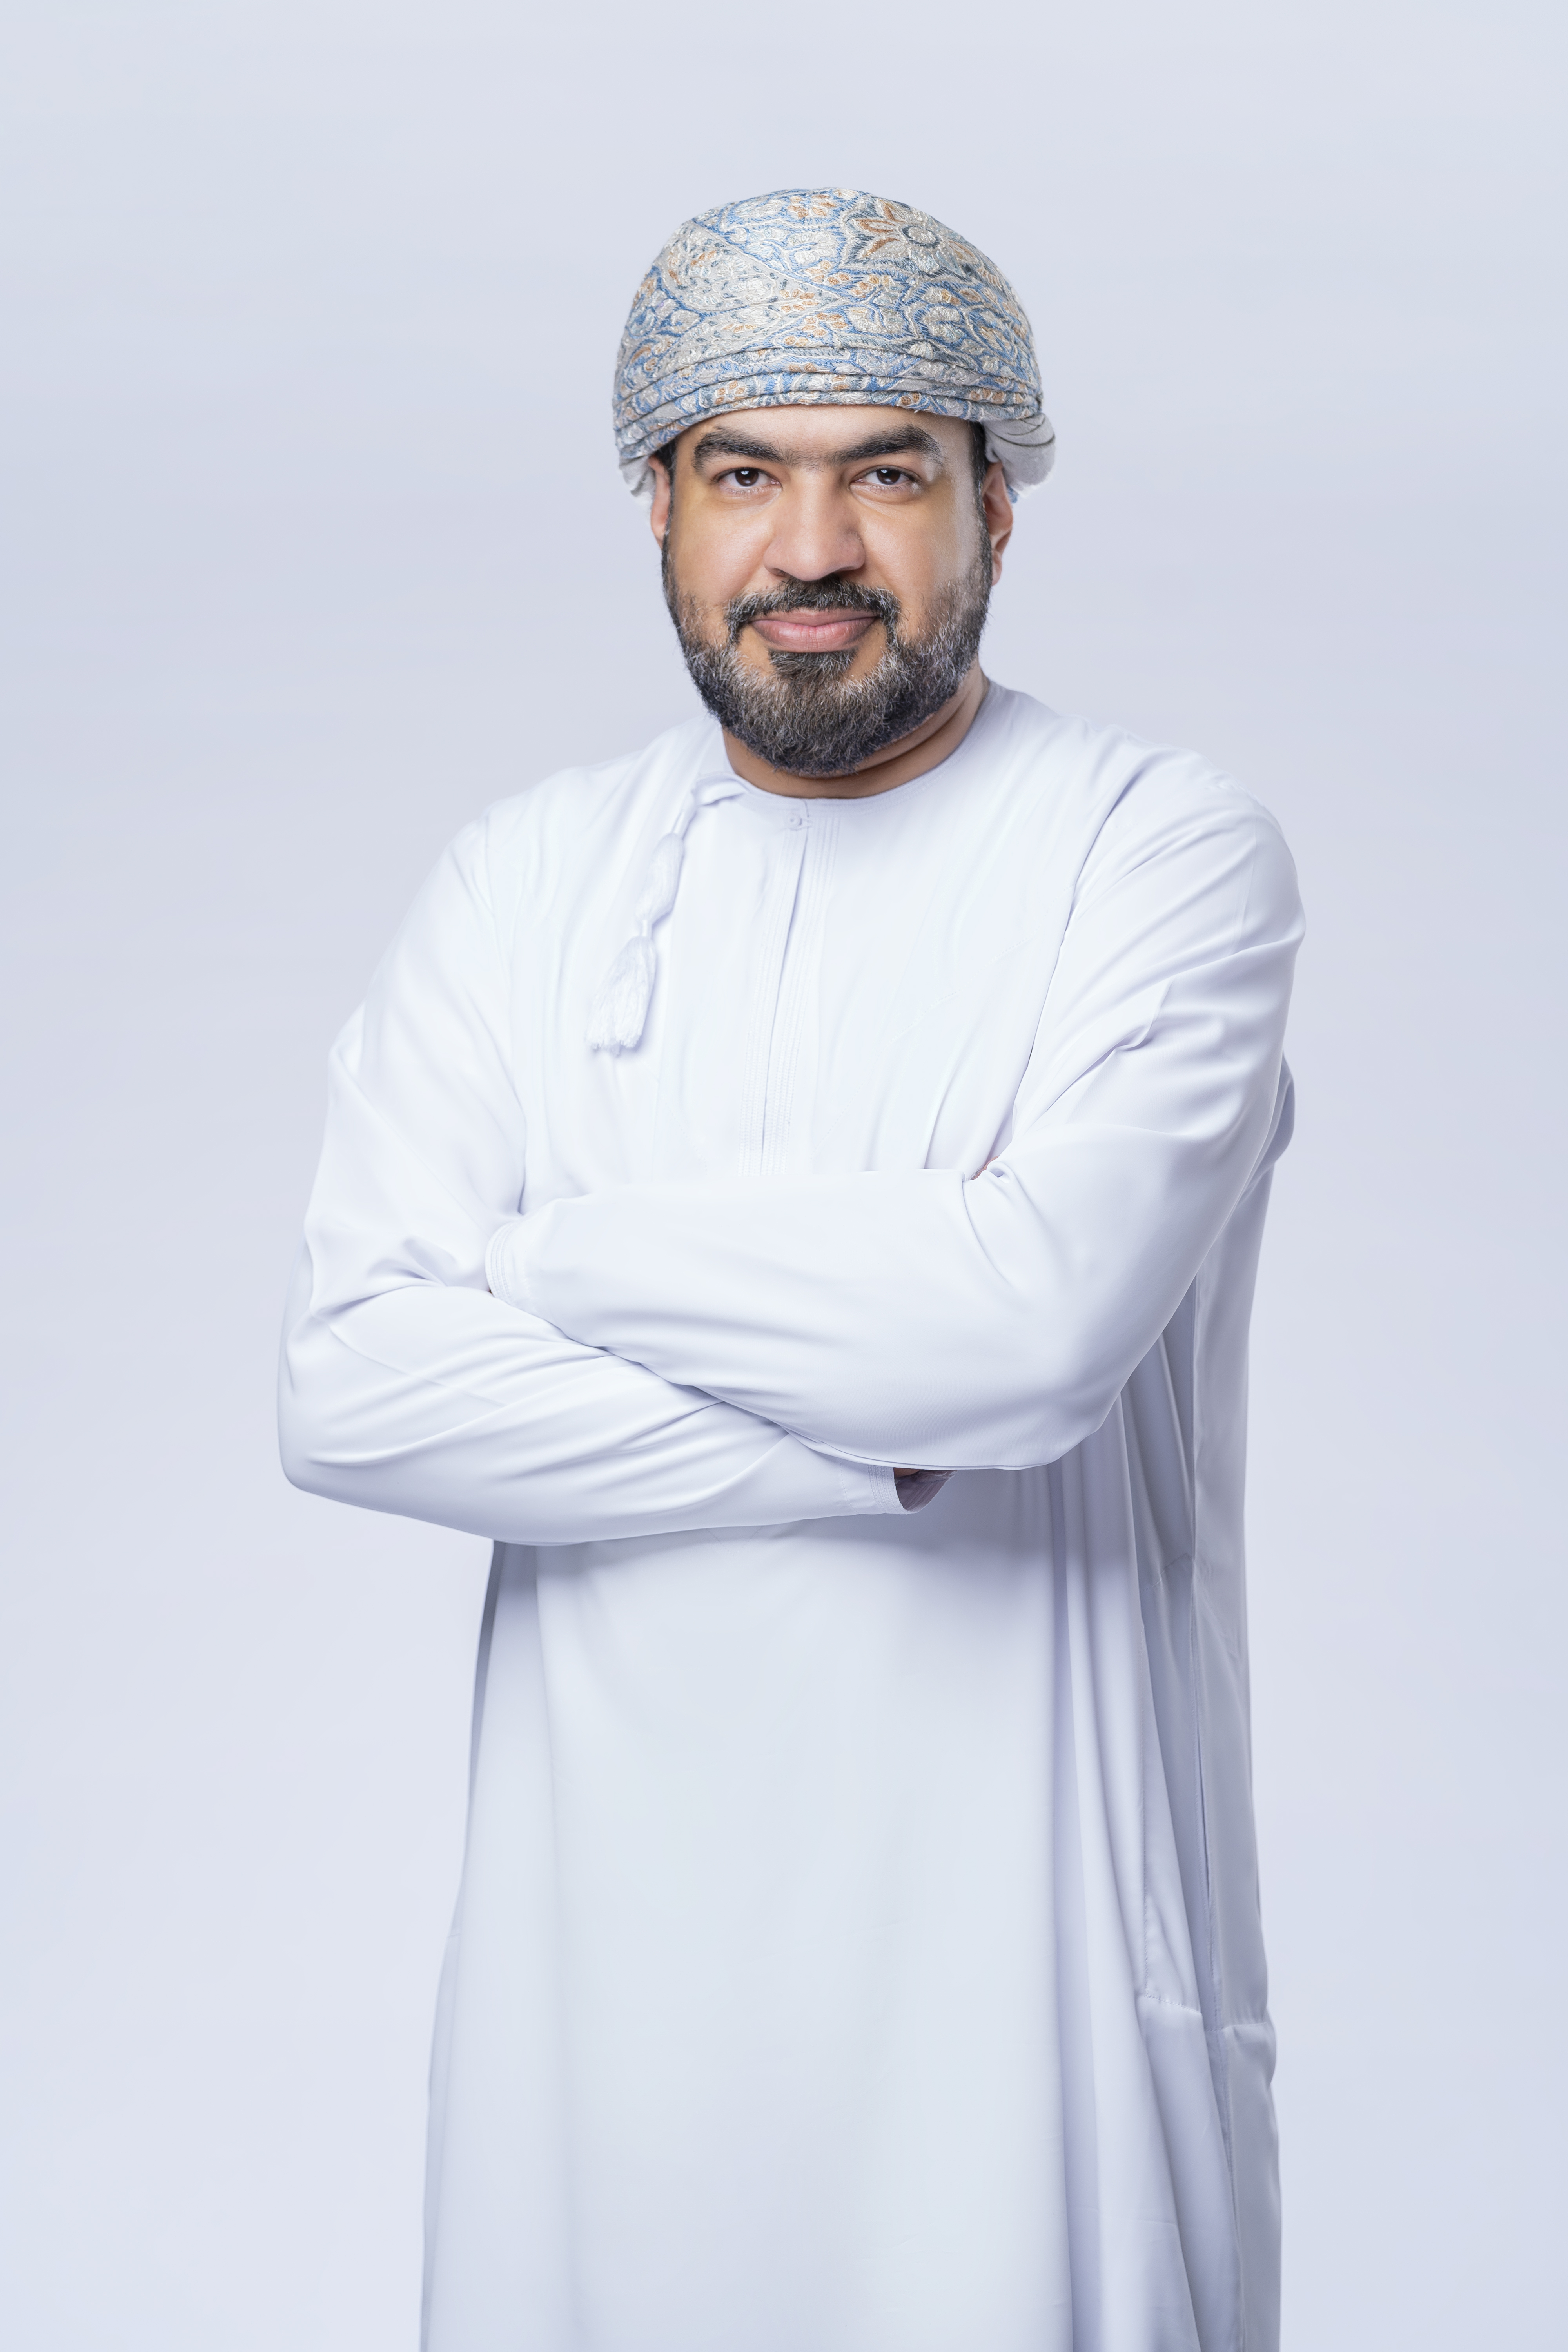 Mohammed Al Shizawi